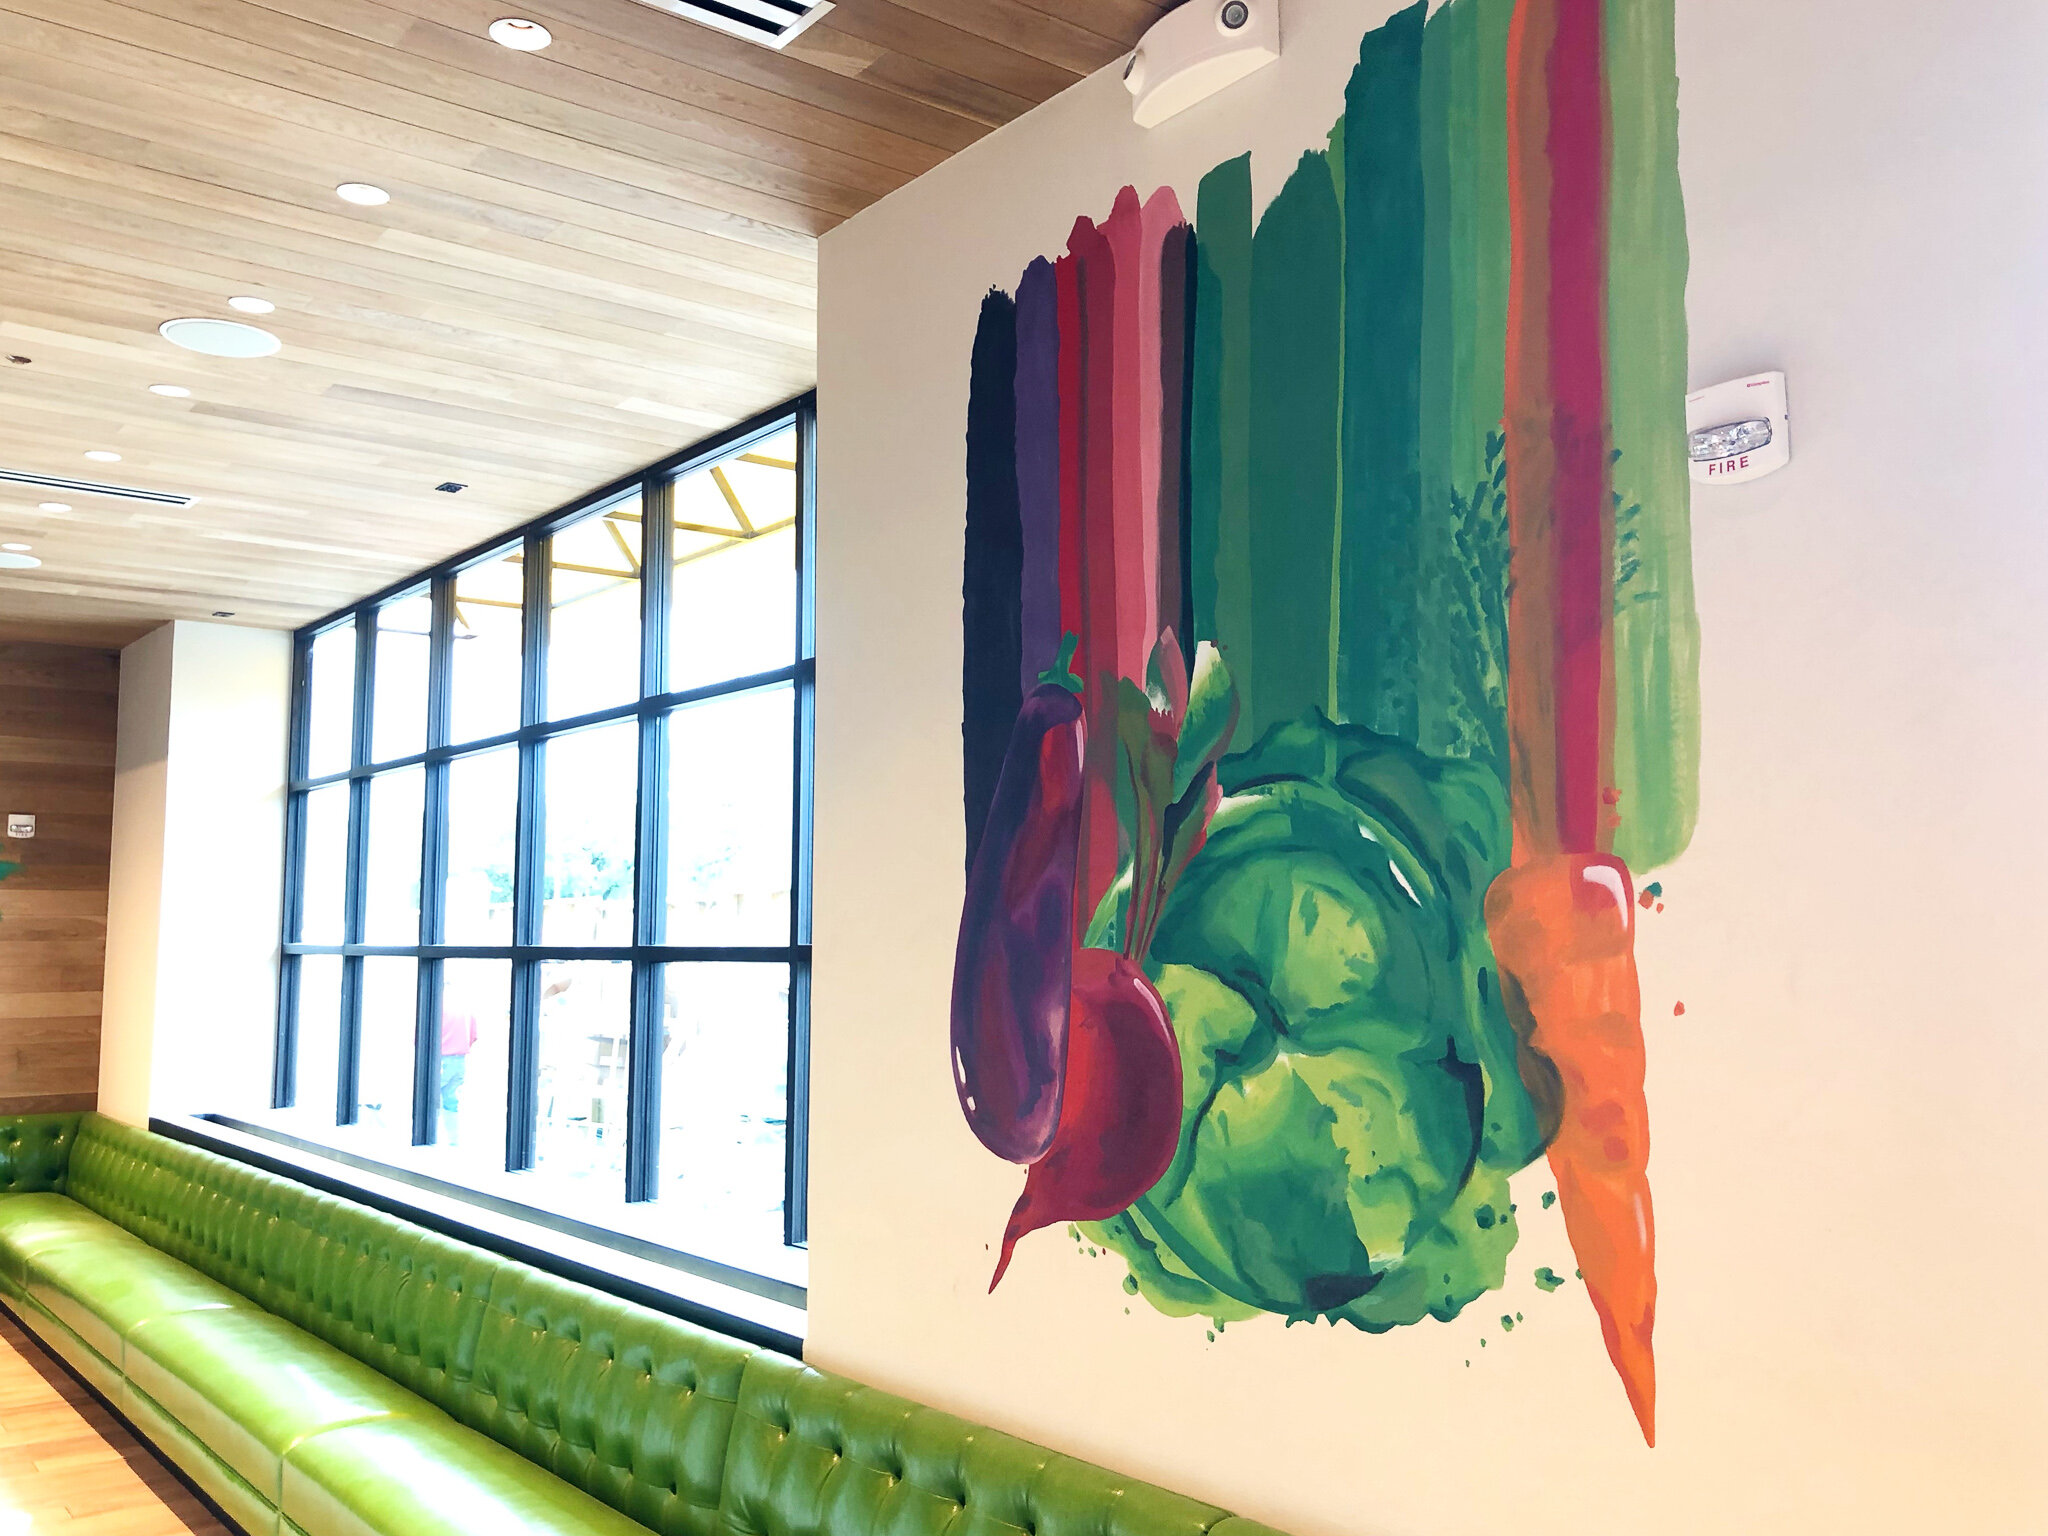 handpainted vegetable mural - interior - by mural artist andrew manning